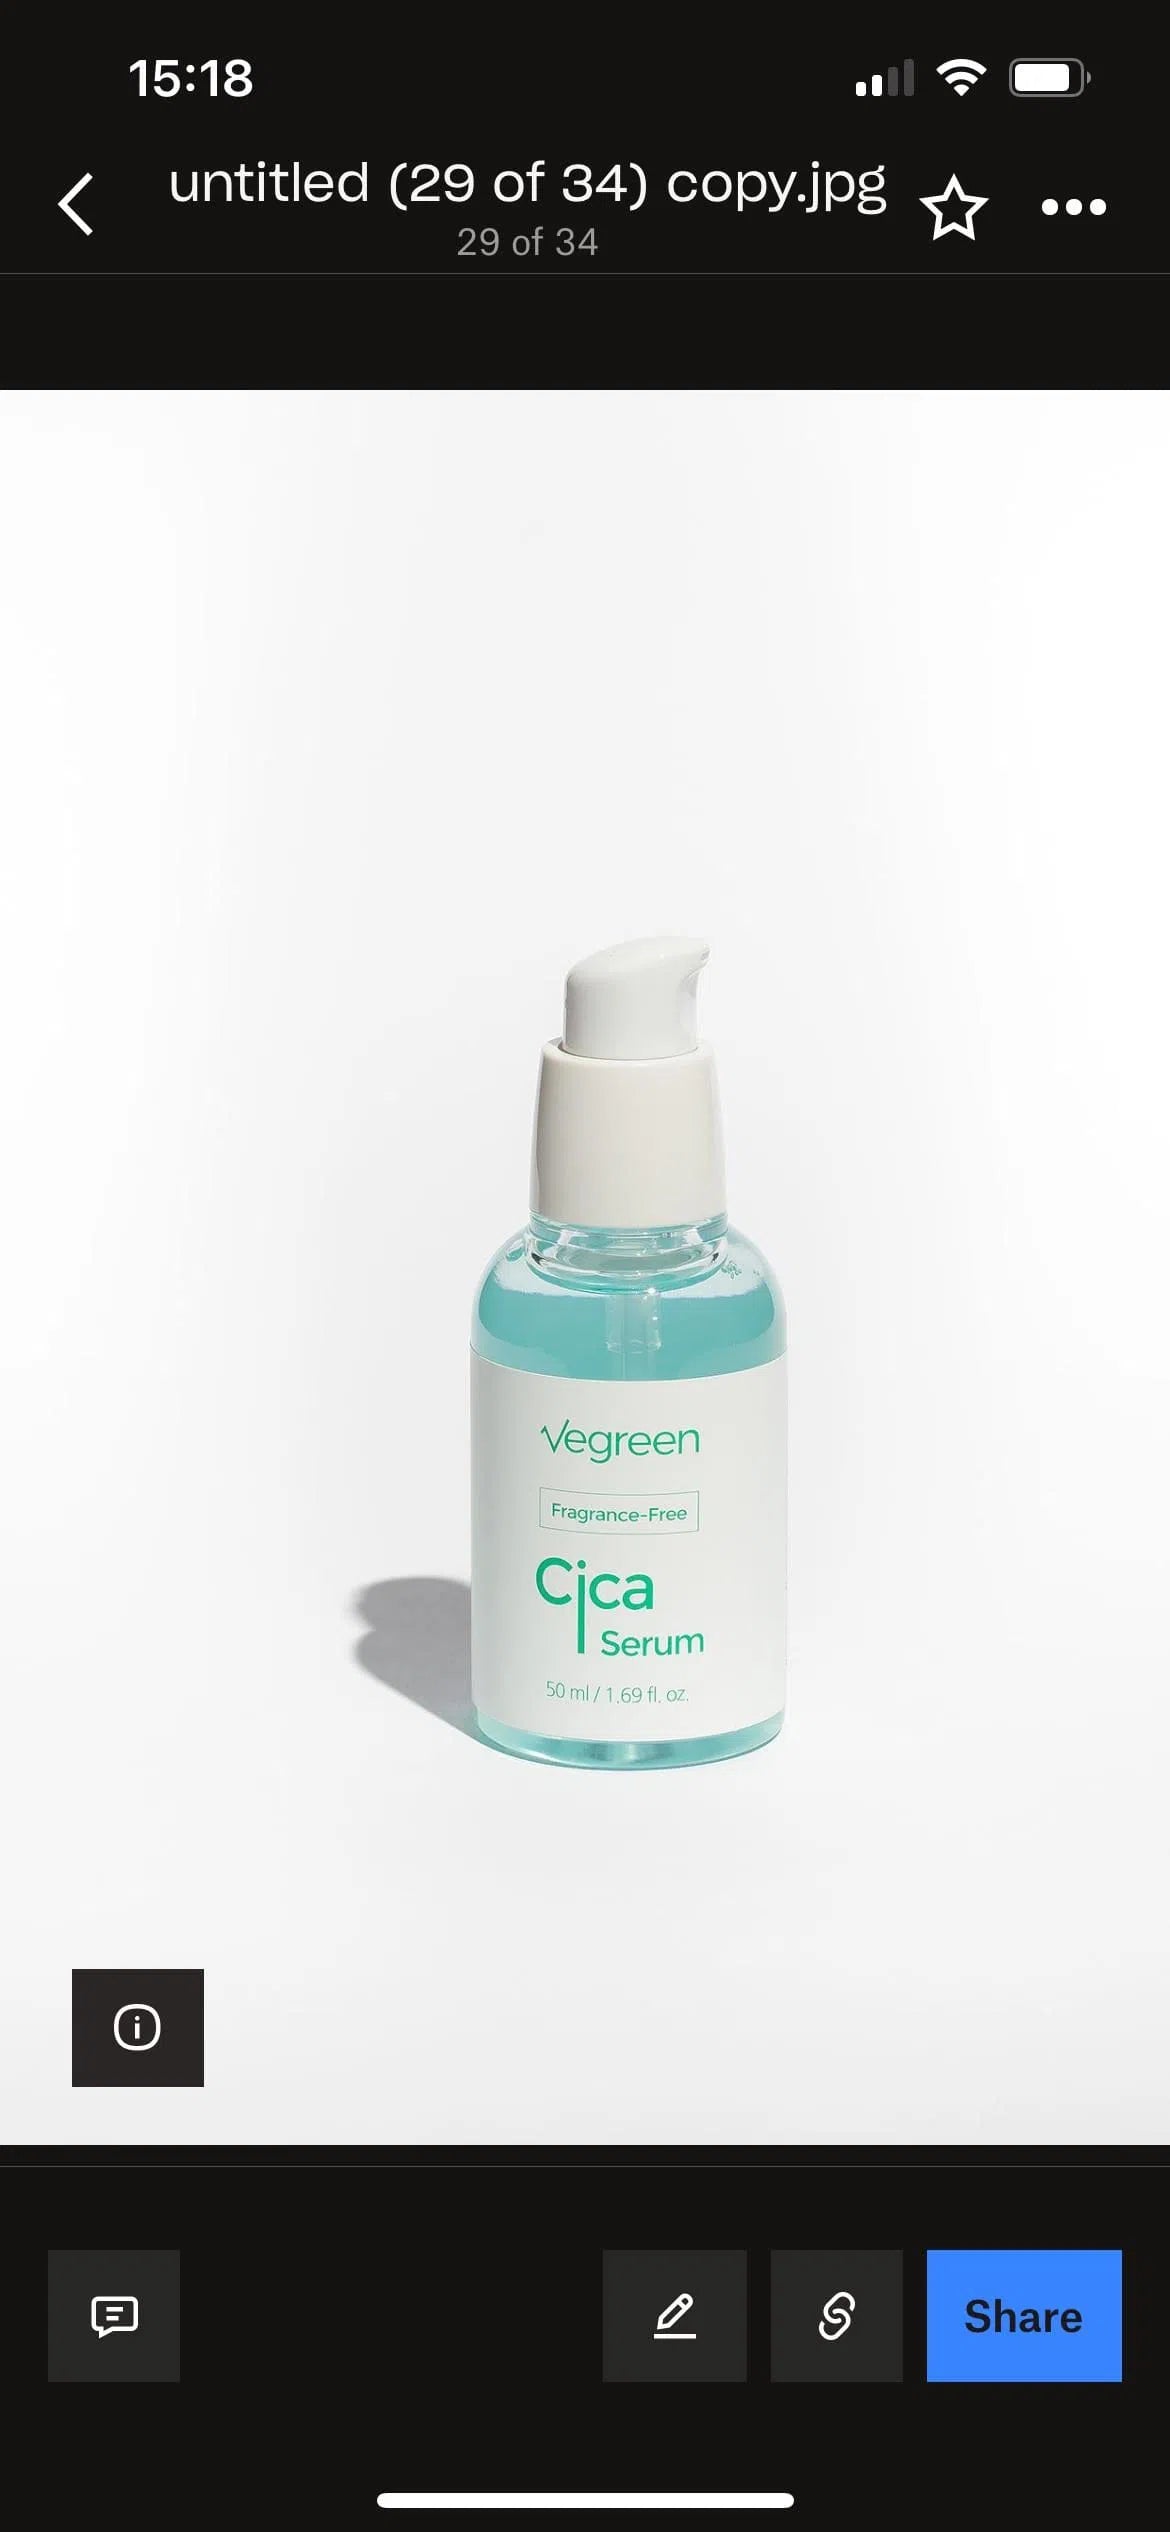 Vegreen Fragrance-Free Cica Serum